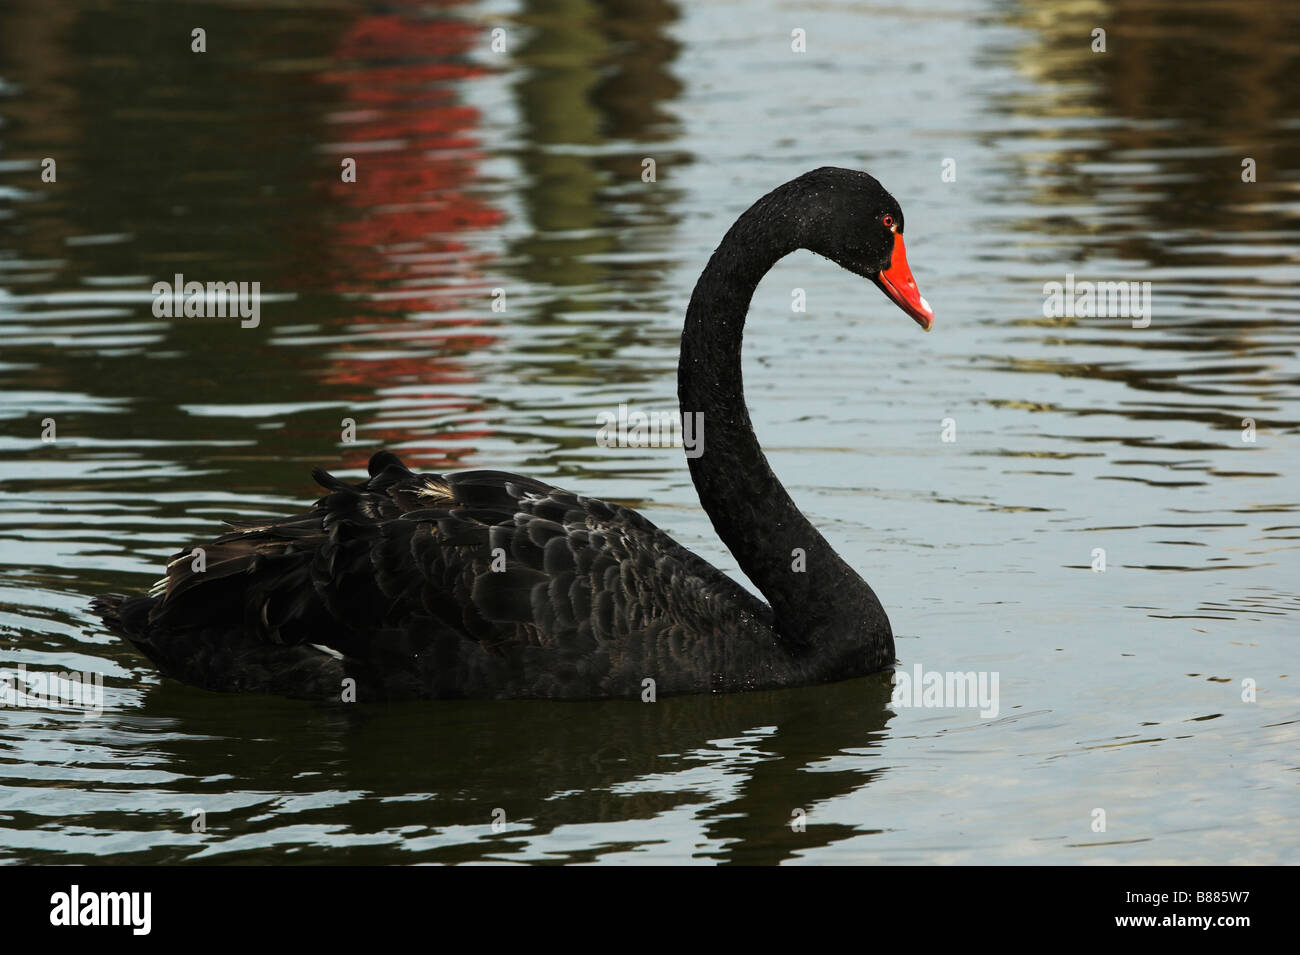 black swan swimming in pond Stock Photo